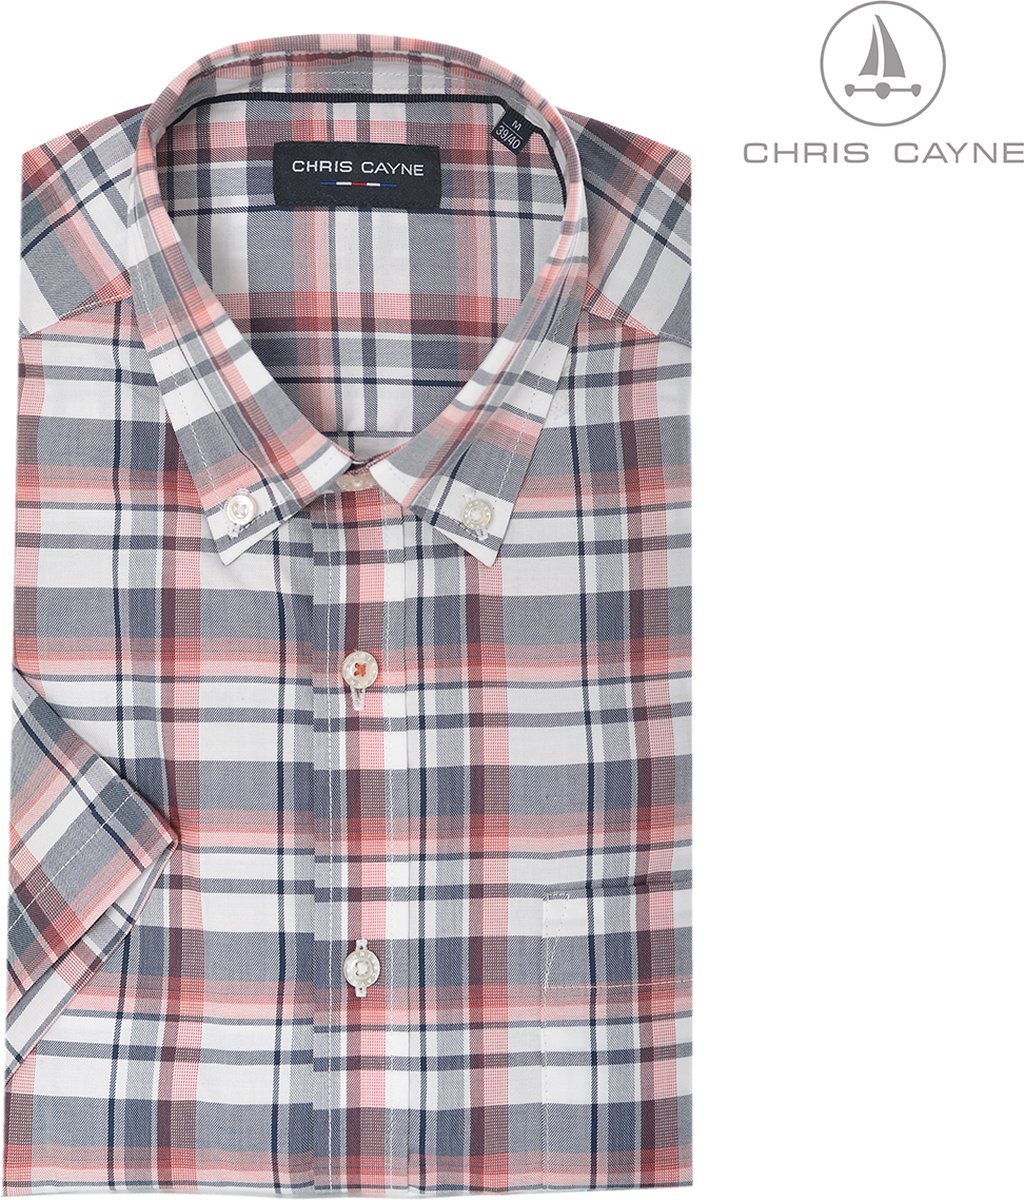 Chris Cayne heren blouse - overhemd 2210 wit/roze/grijs ruit - KM - maat L